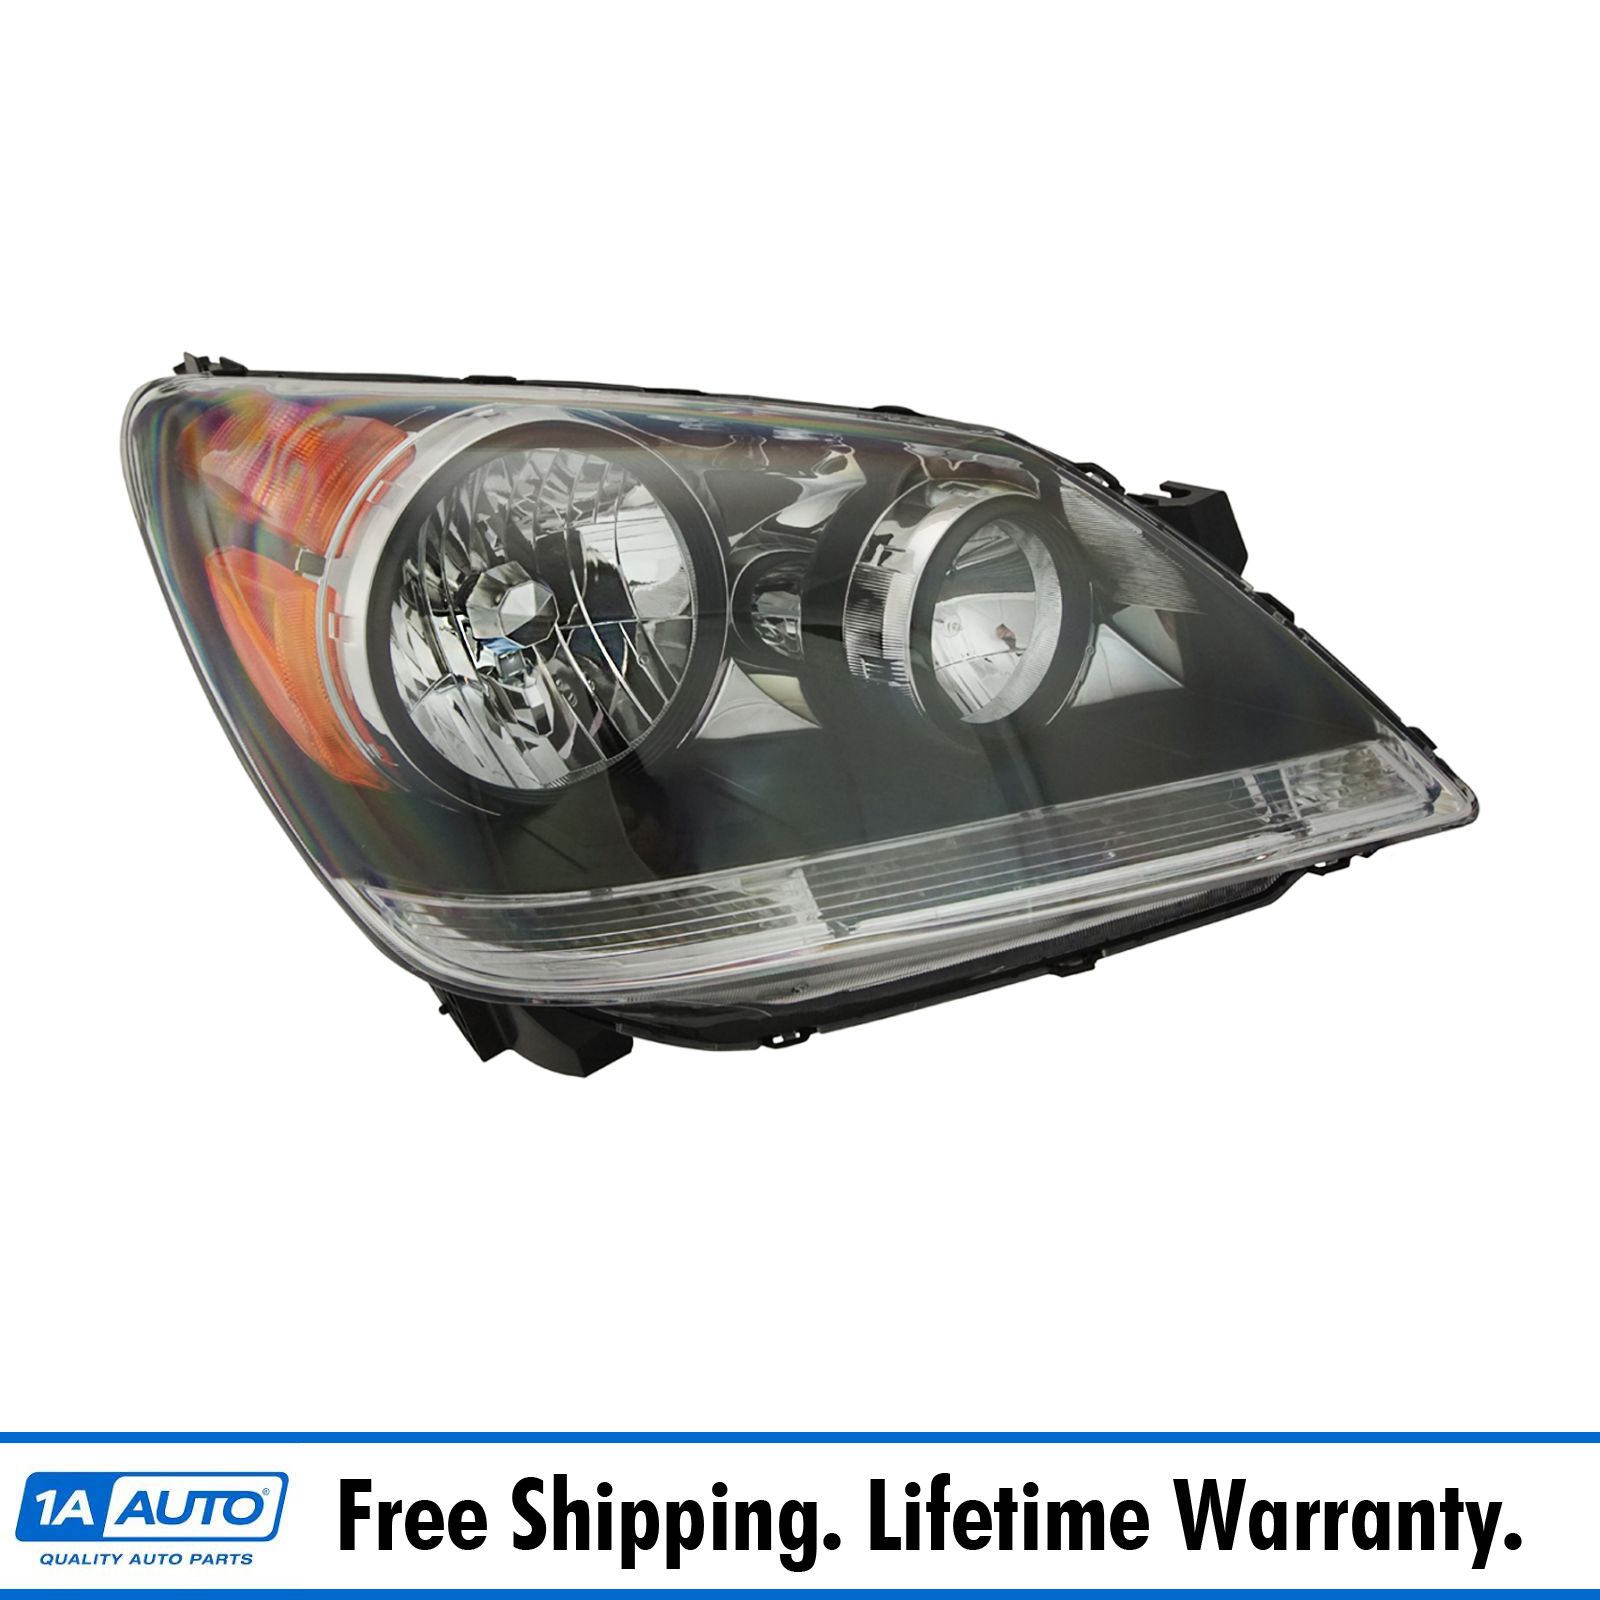 Headlight Headlamp Passenger Side Right RH New for 08 10 Honda Odyssey | eBay